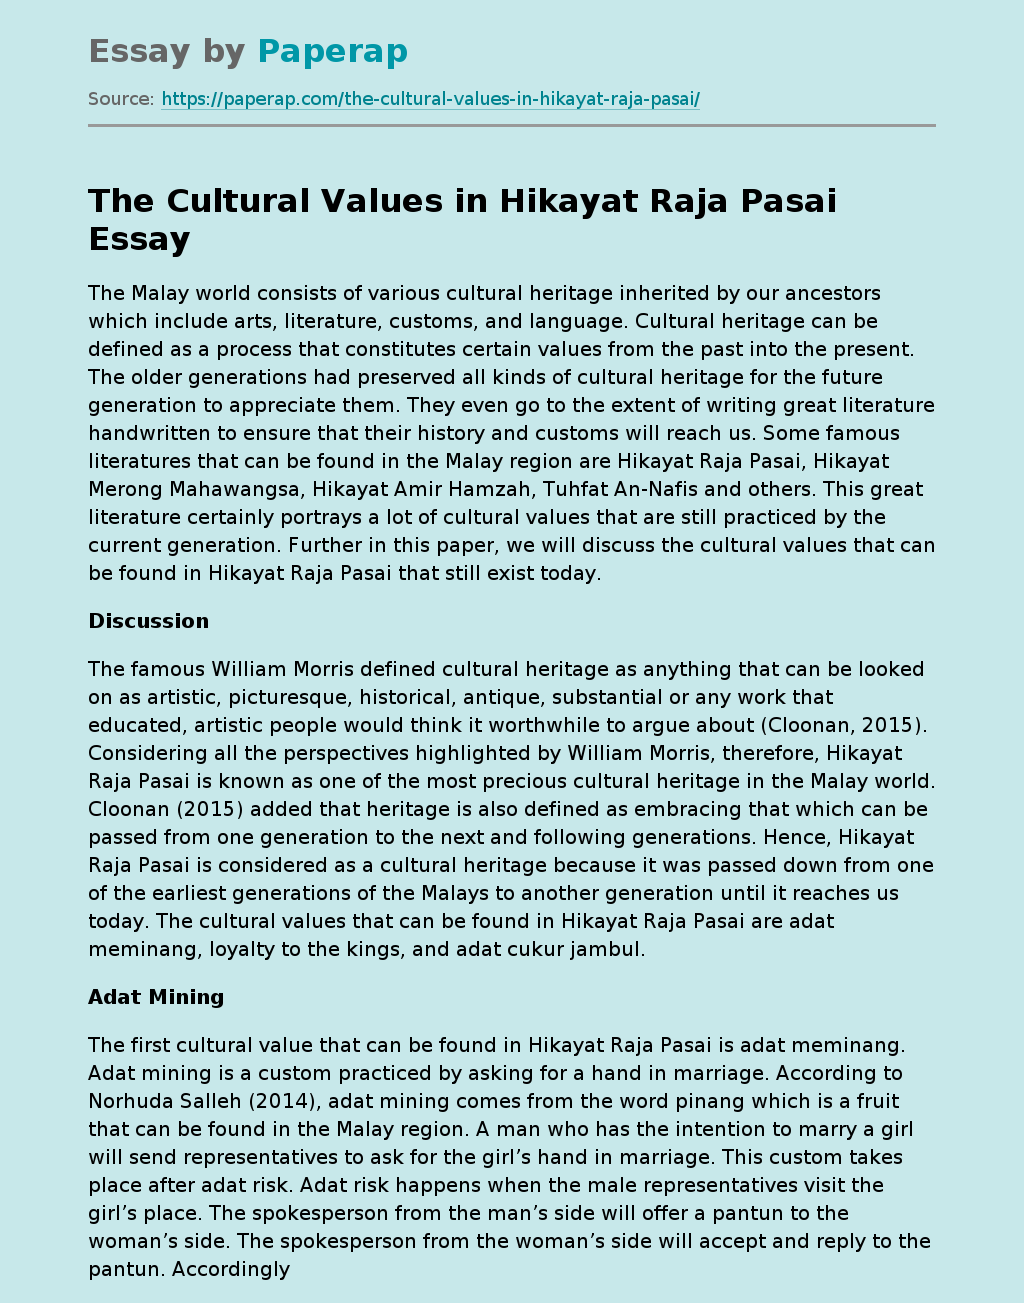 The Cultural Values in Hikayat Raja Pasai